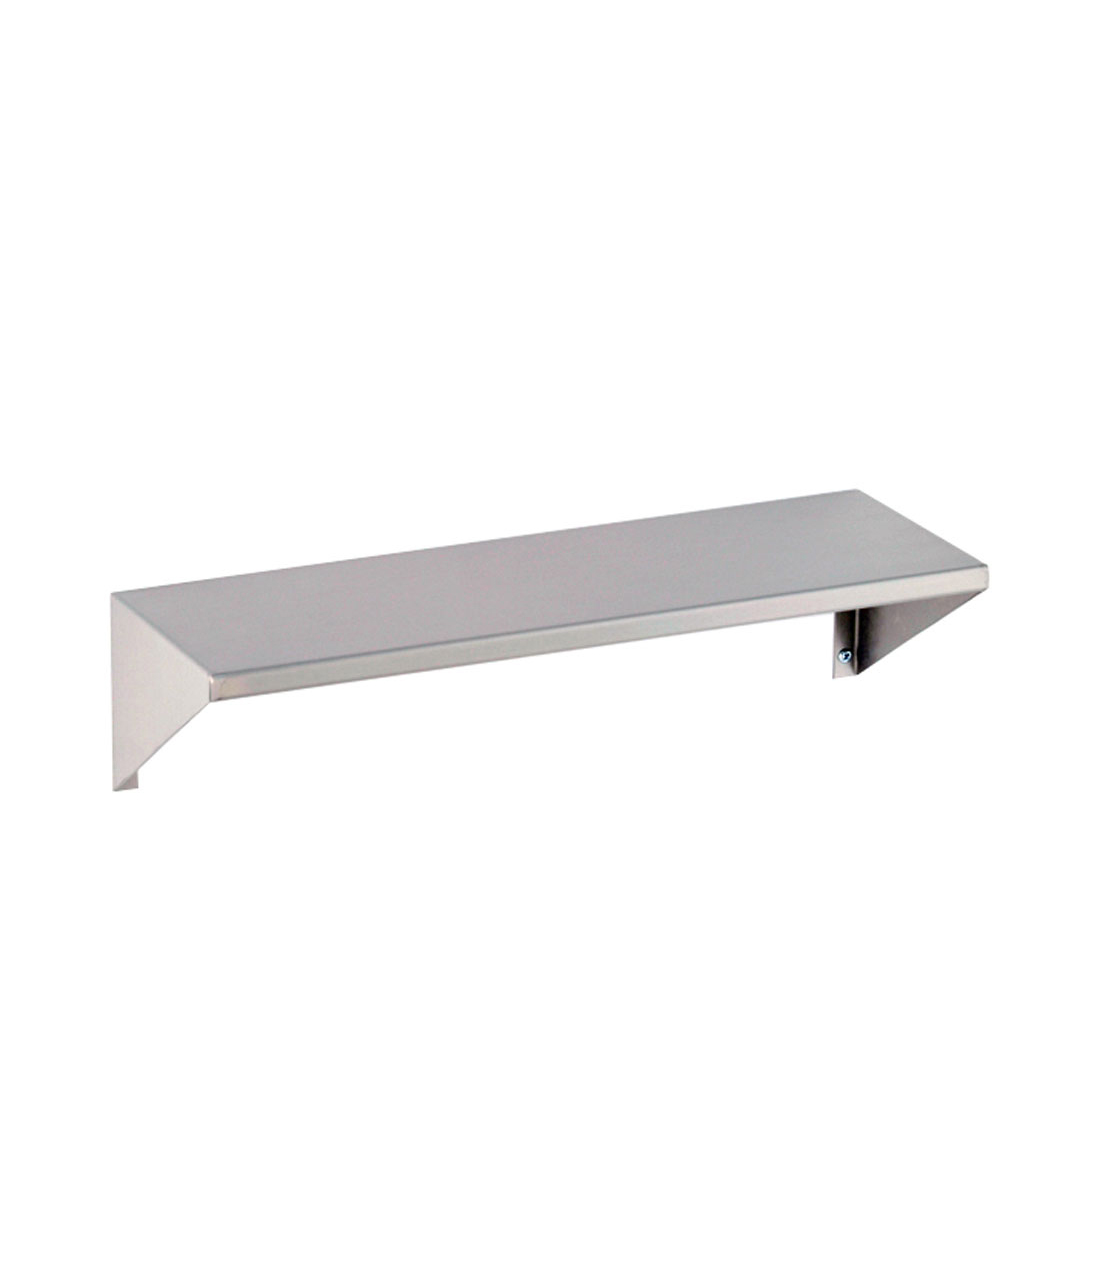 Stainless Steel Shelf - (Model #: s-8-series) main image